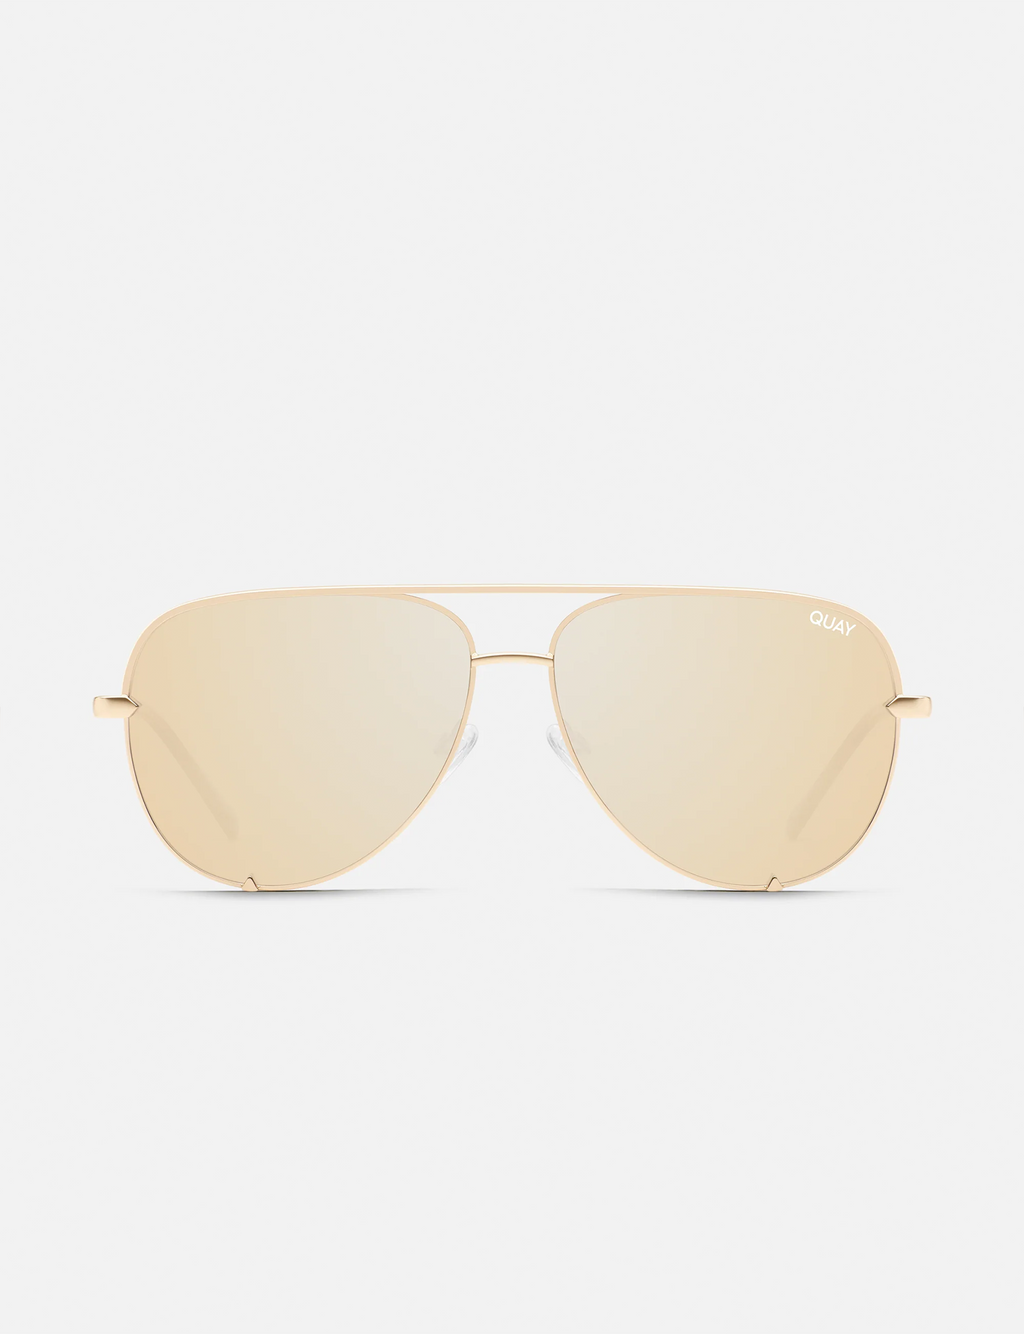 High Key XL Sunglasses, Gold/Champagne